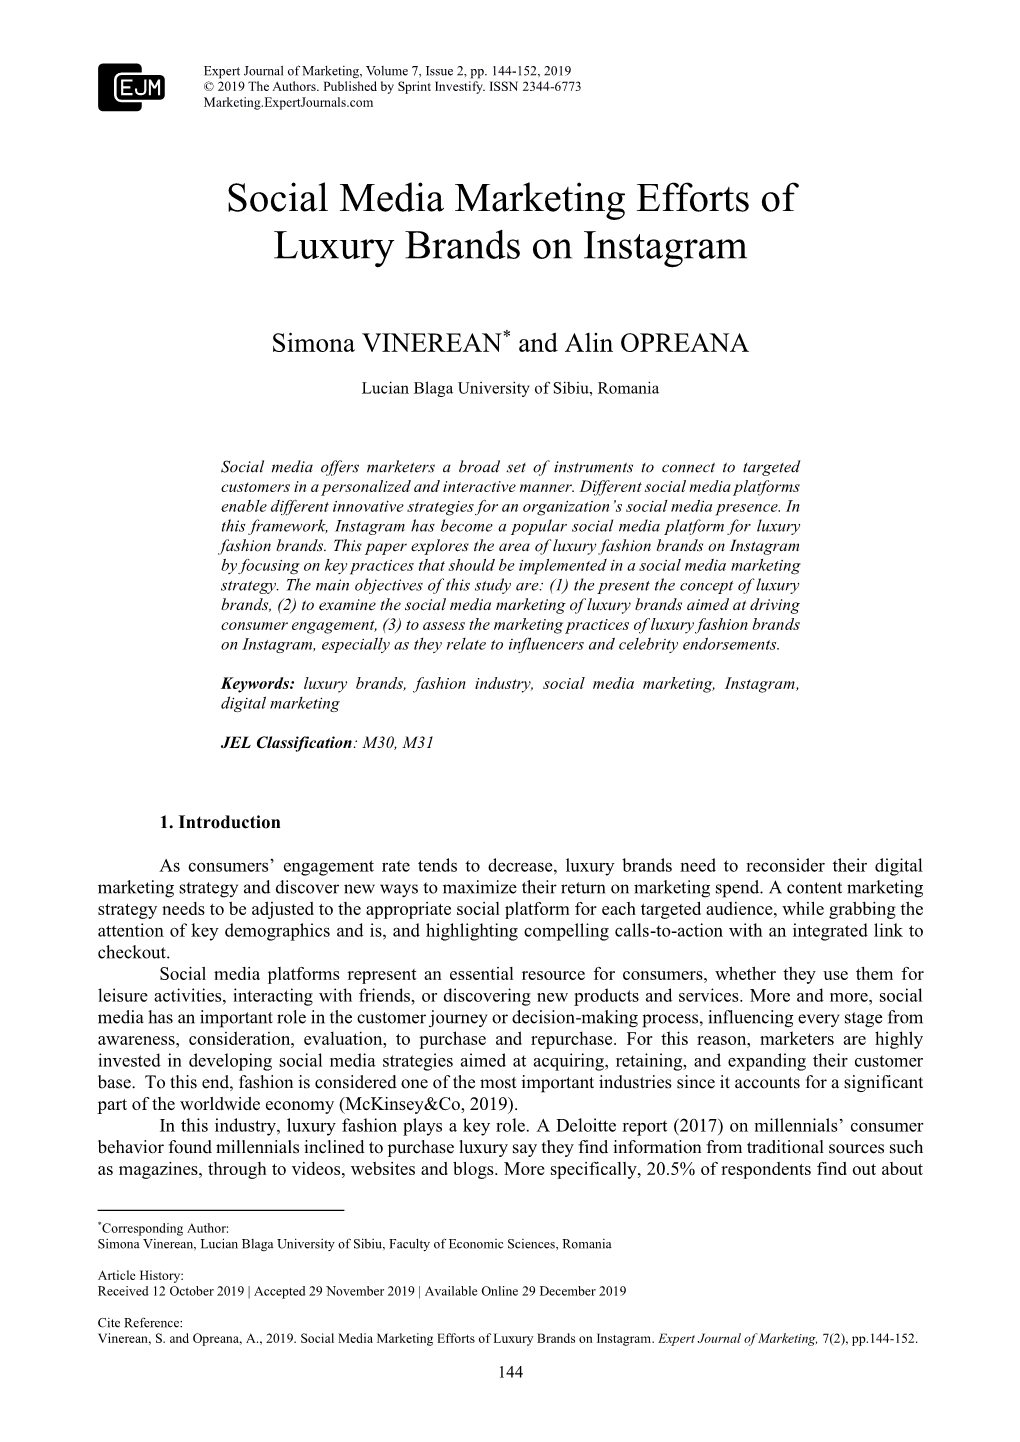 Social Media Marketing Efforts of Luxury Brands on Instagram